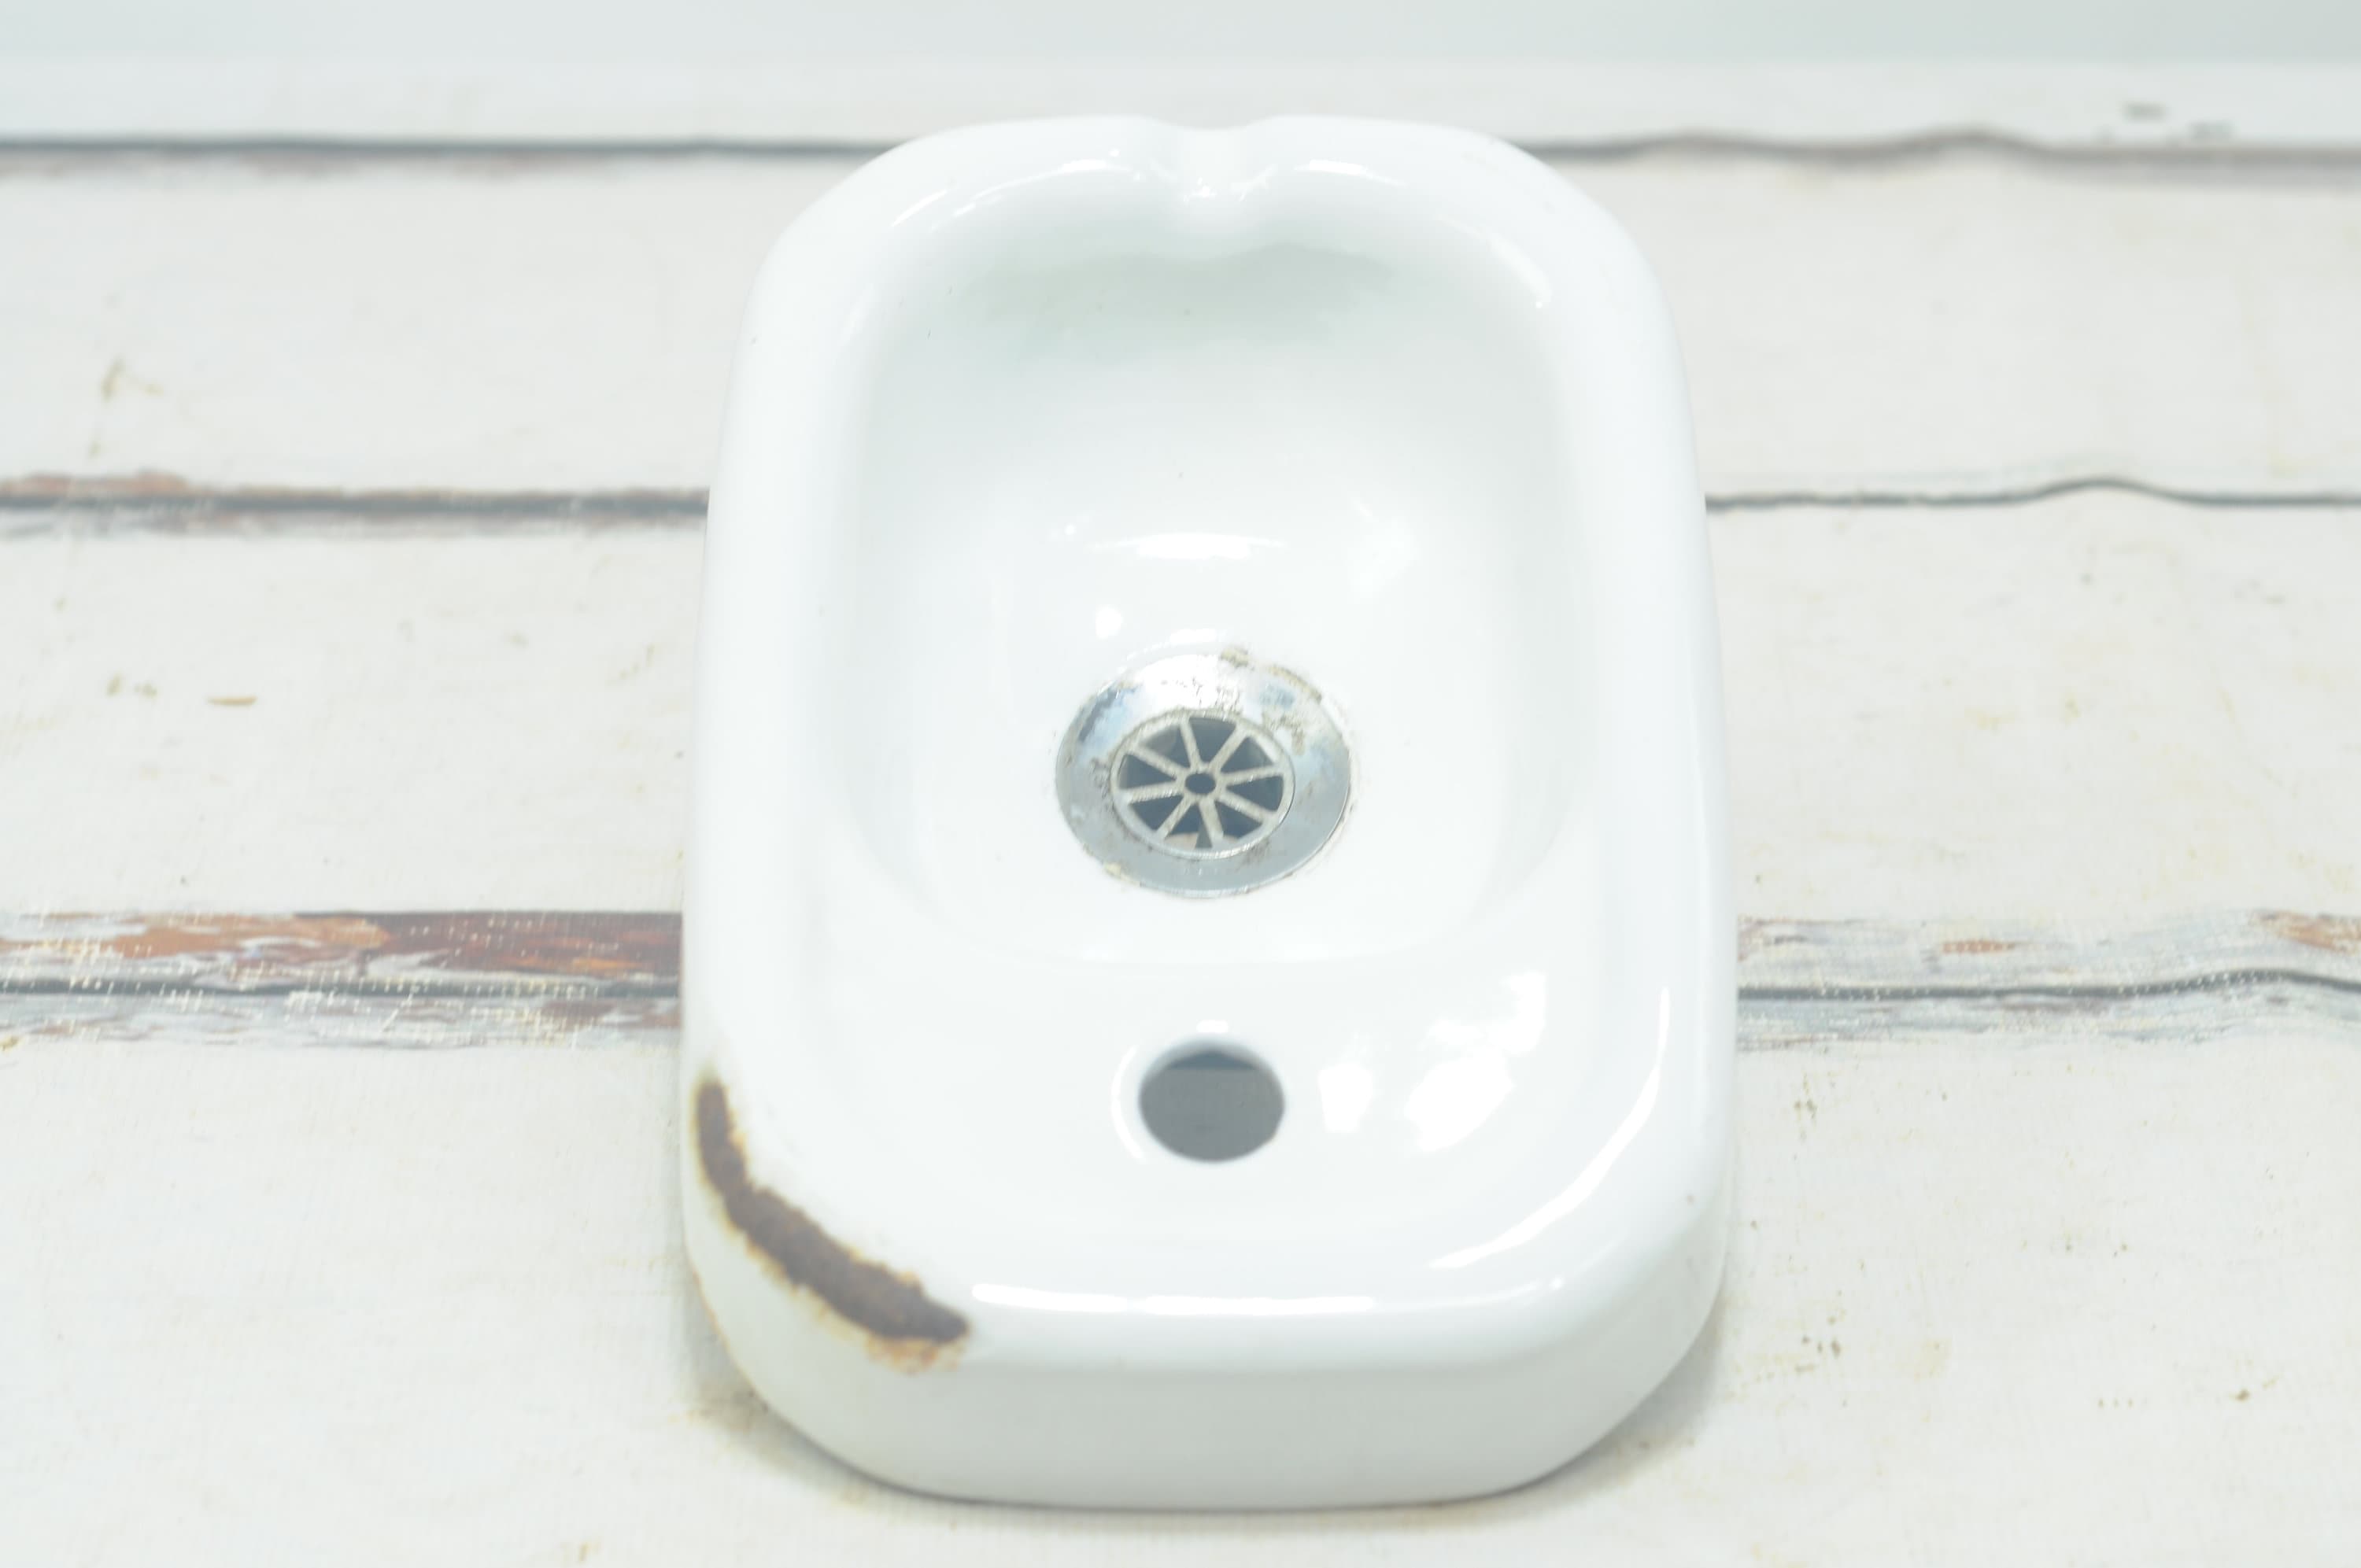 50 Drainboard Sink - Single Bowl - Reversible Drainboard (5PS30c)